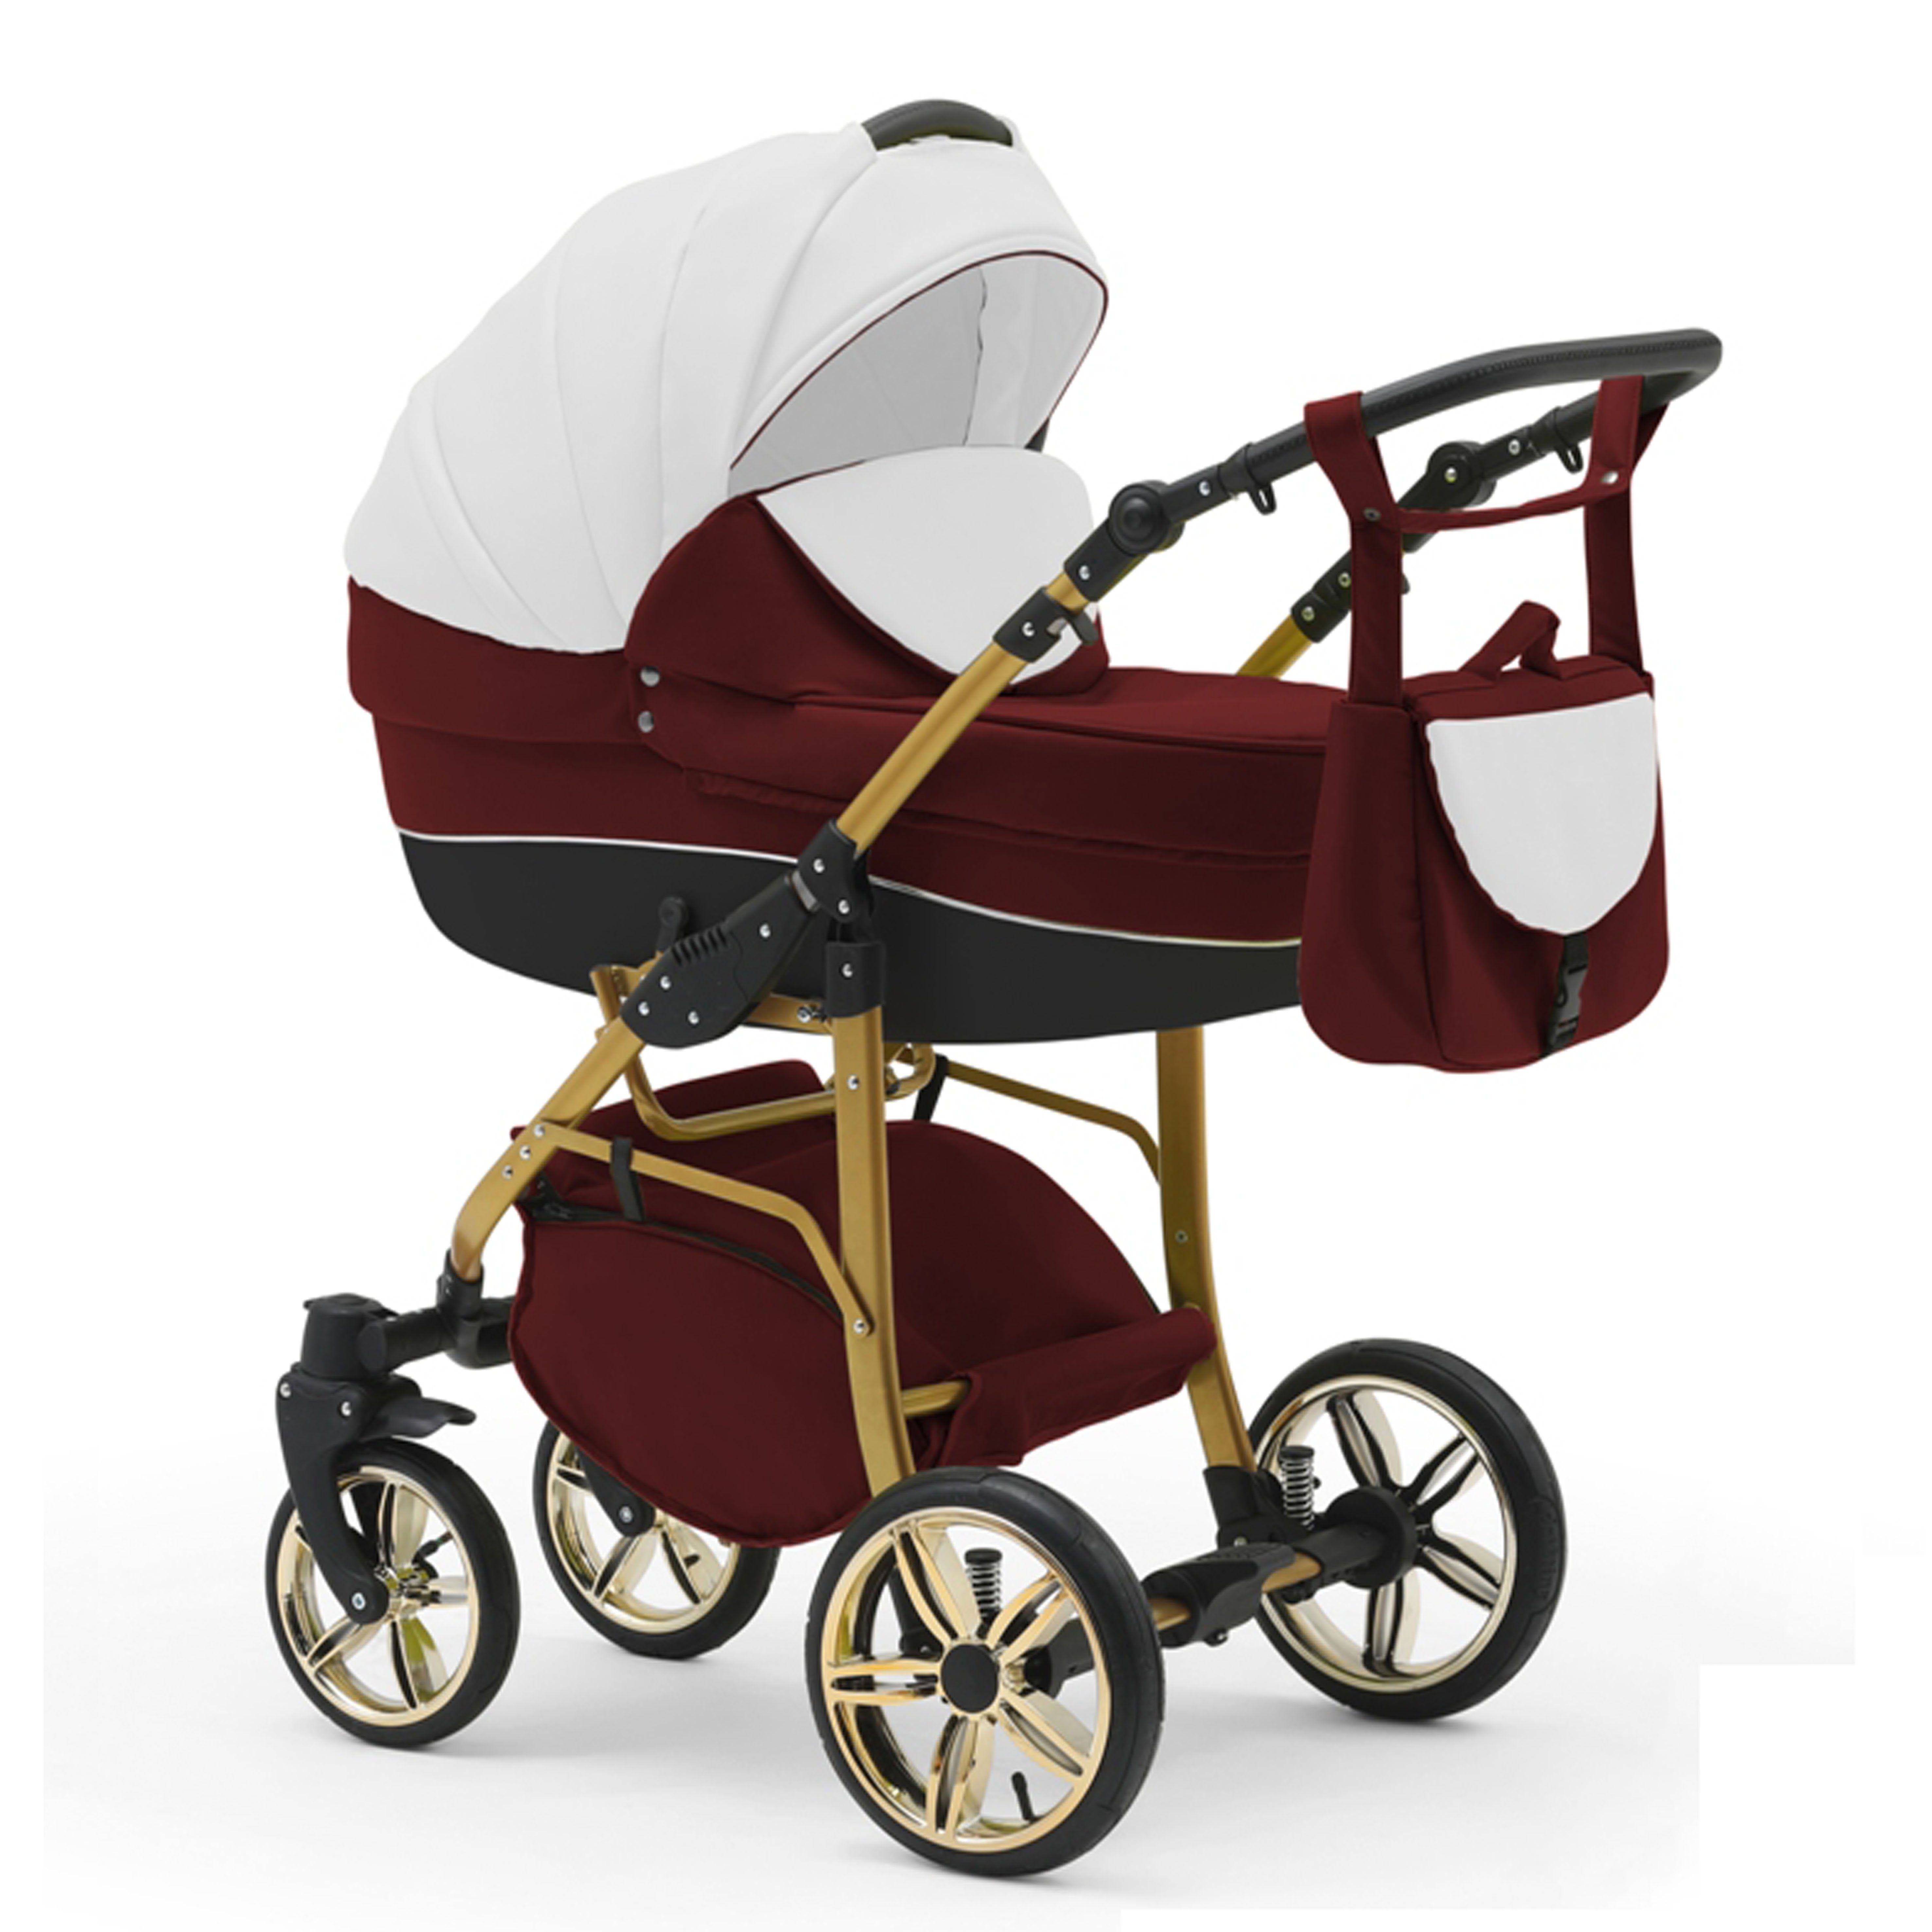 Cosmo 13 - 46 in - Kinderwagen-Set Weiß-Bordeaux-Schwarz babies-on-wheels 2 Gold 1 Farben in Teile Kombi-Kinderwagen